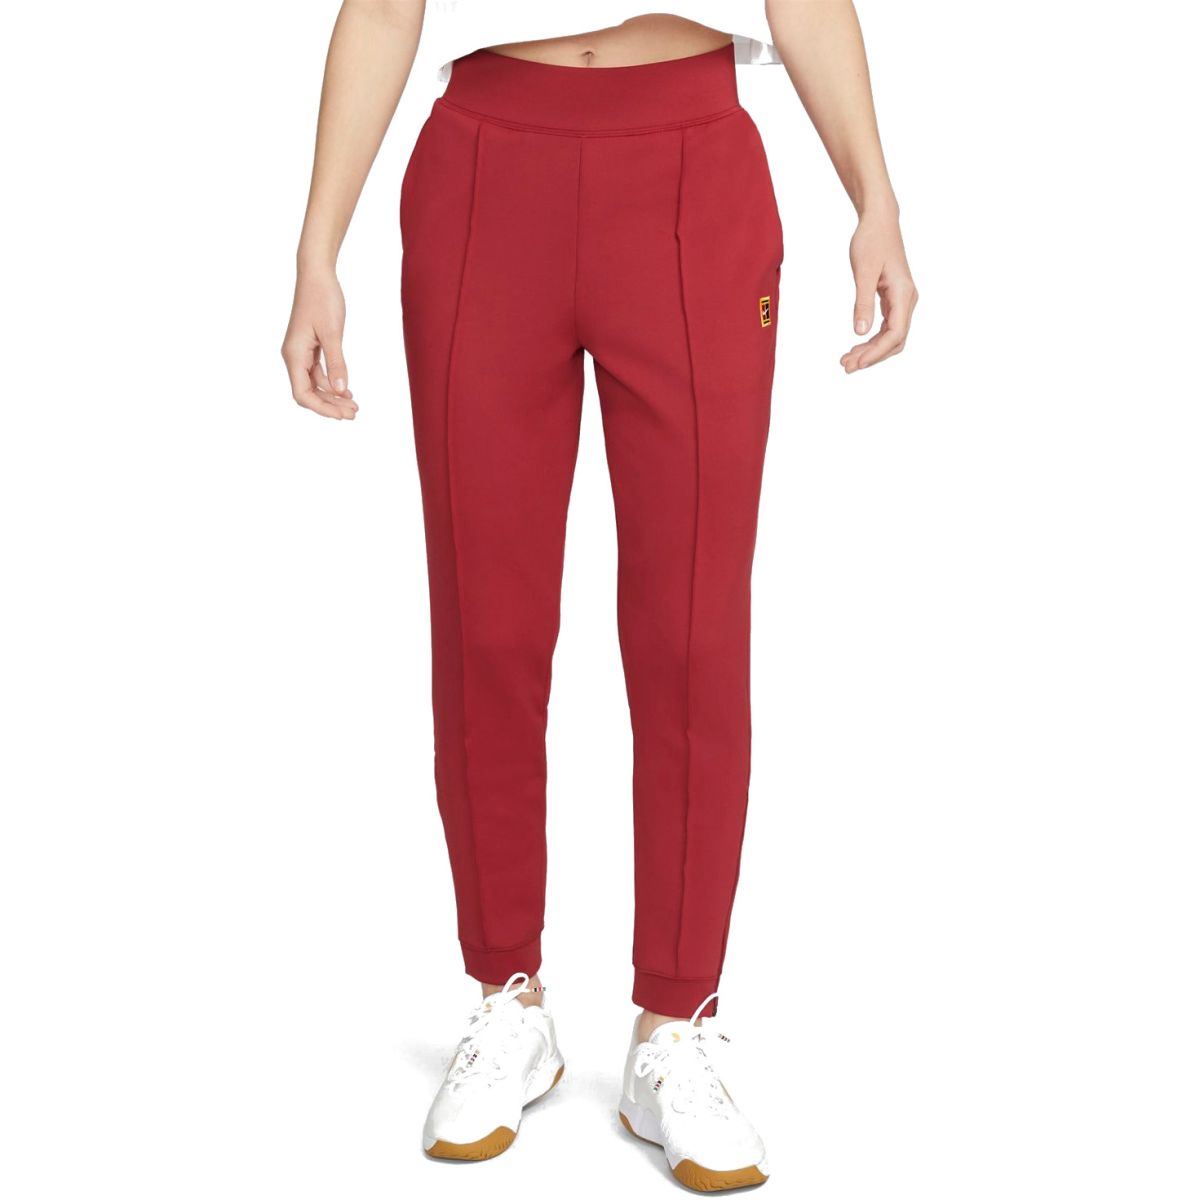 Nikecourt dri-fit heritage women's tennis pants, pants